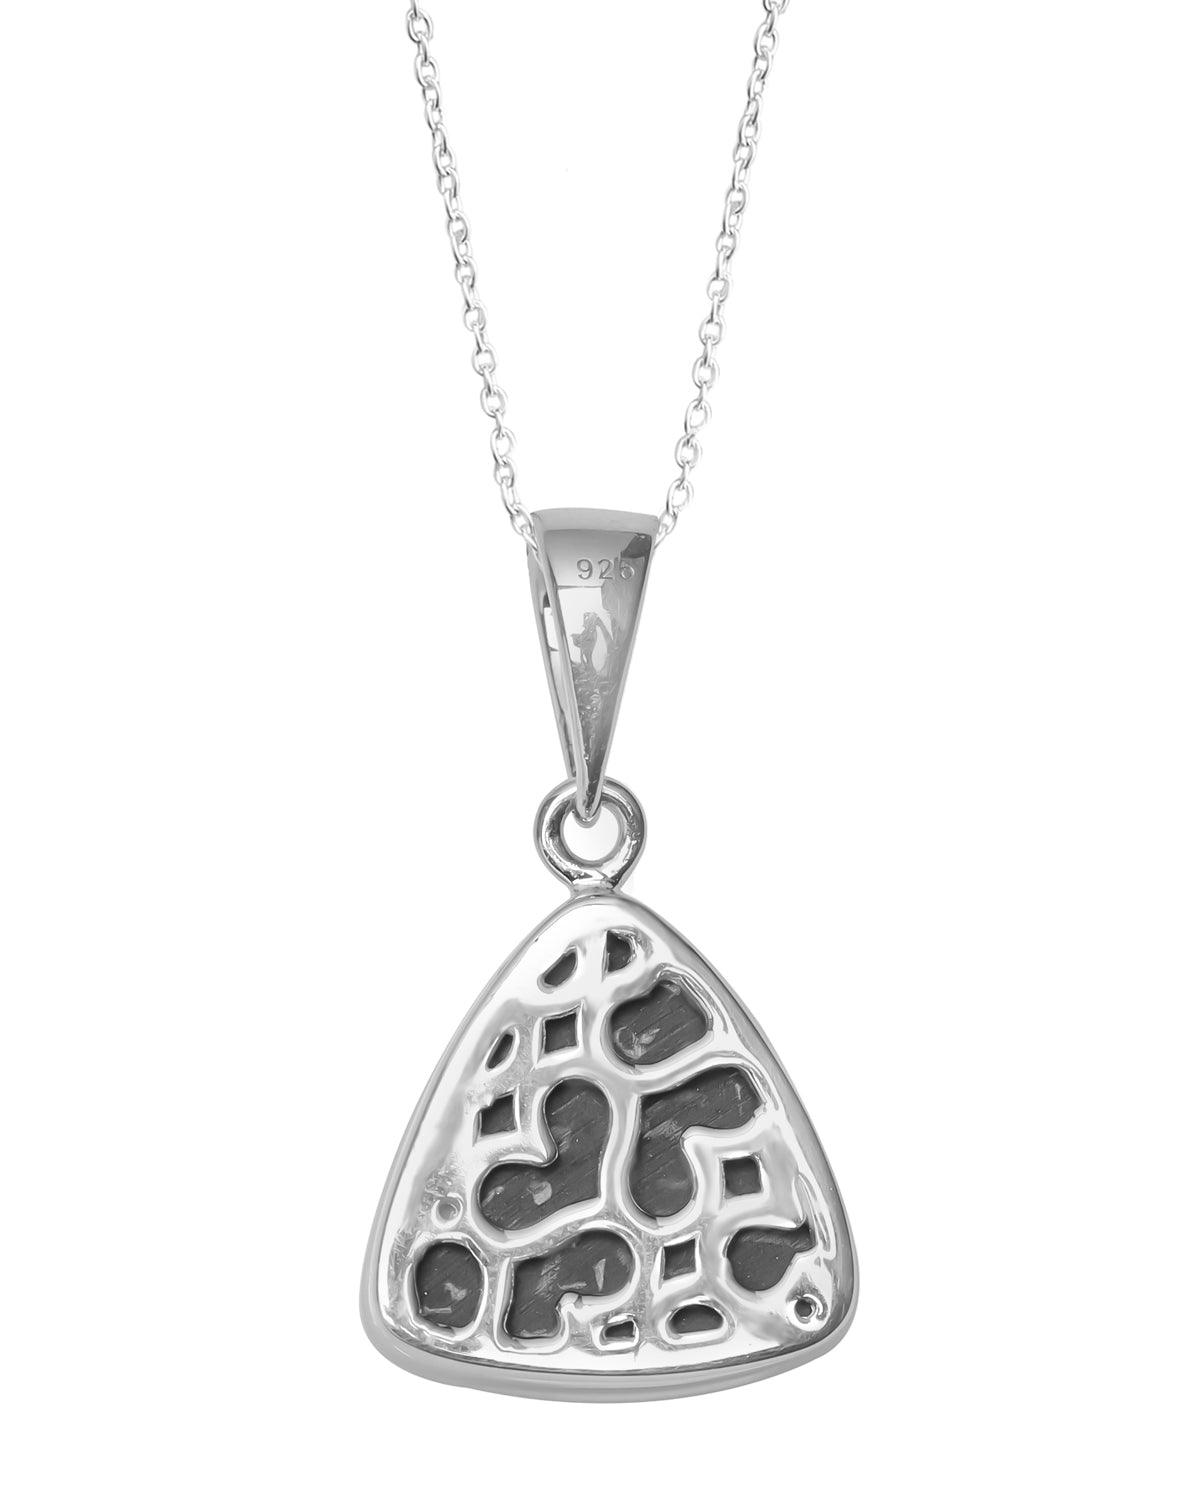 6 Ct. Ammolite 925 Sterling Silver Necklace Pendant Jewelry - YoTreasure